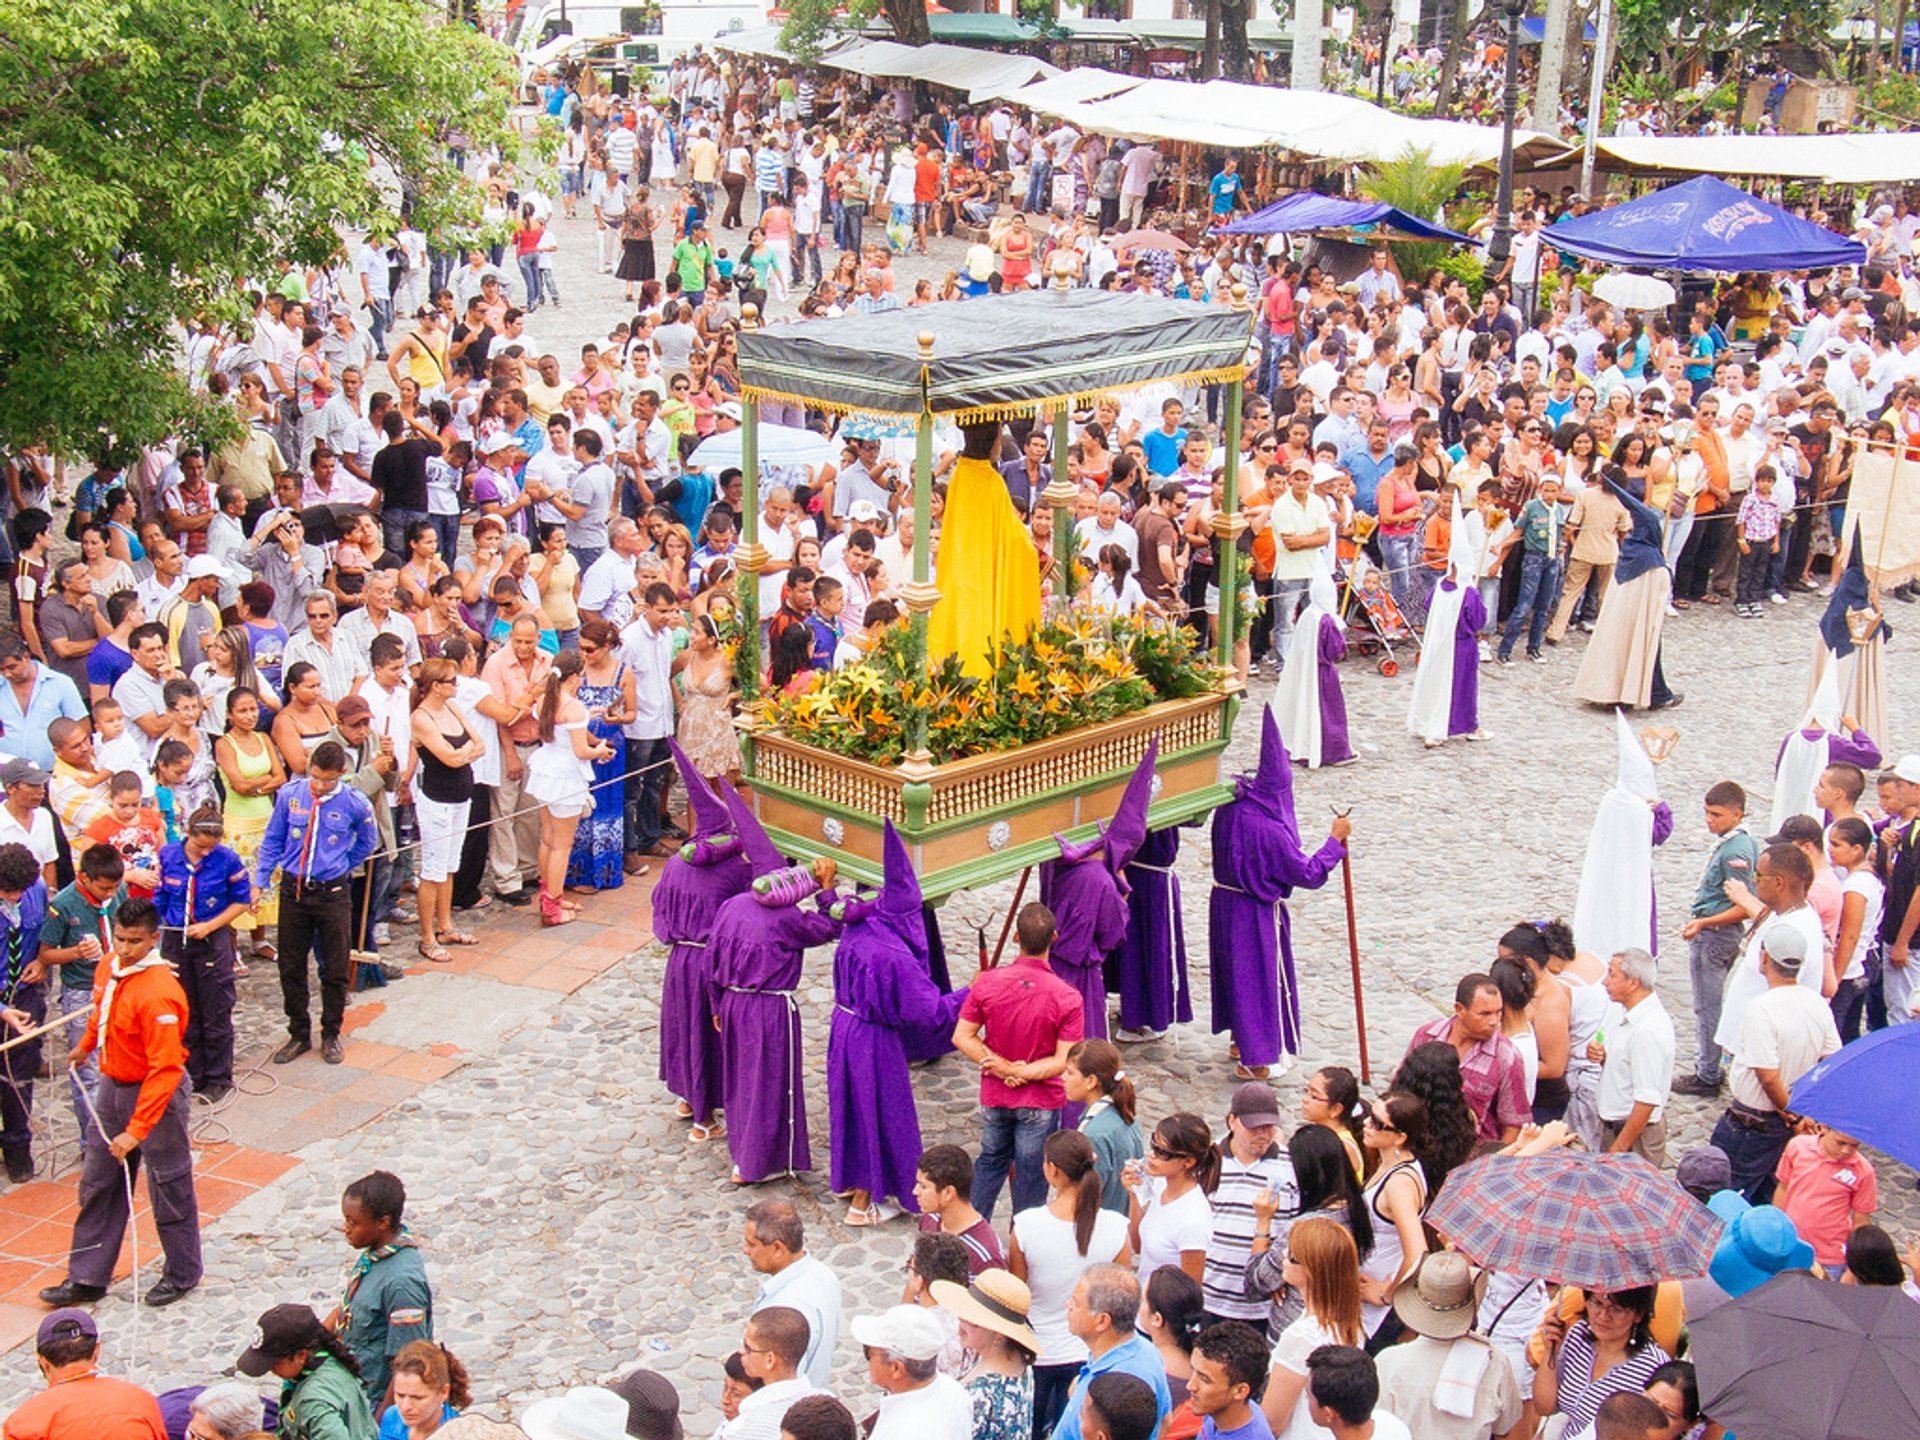 Hoe vier je Pasen in Colombia?